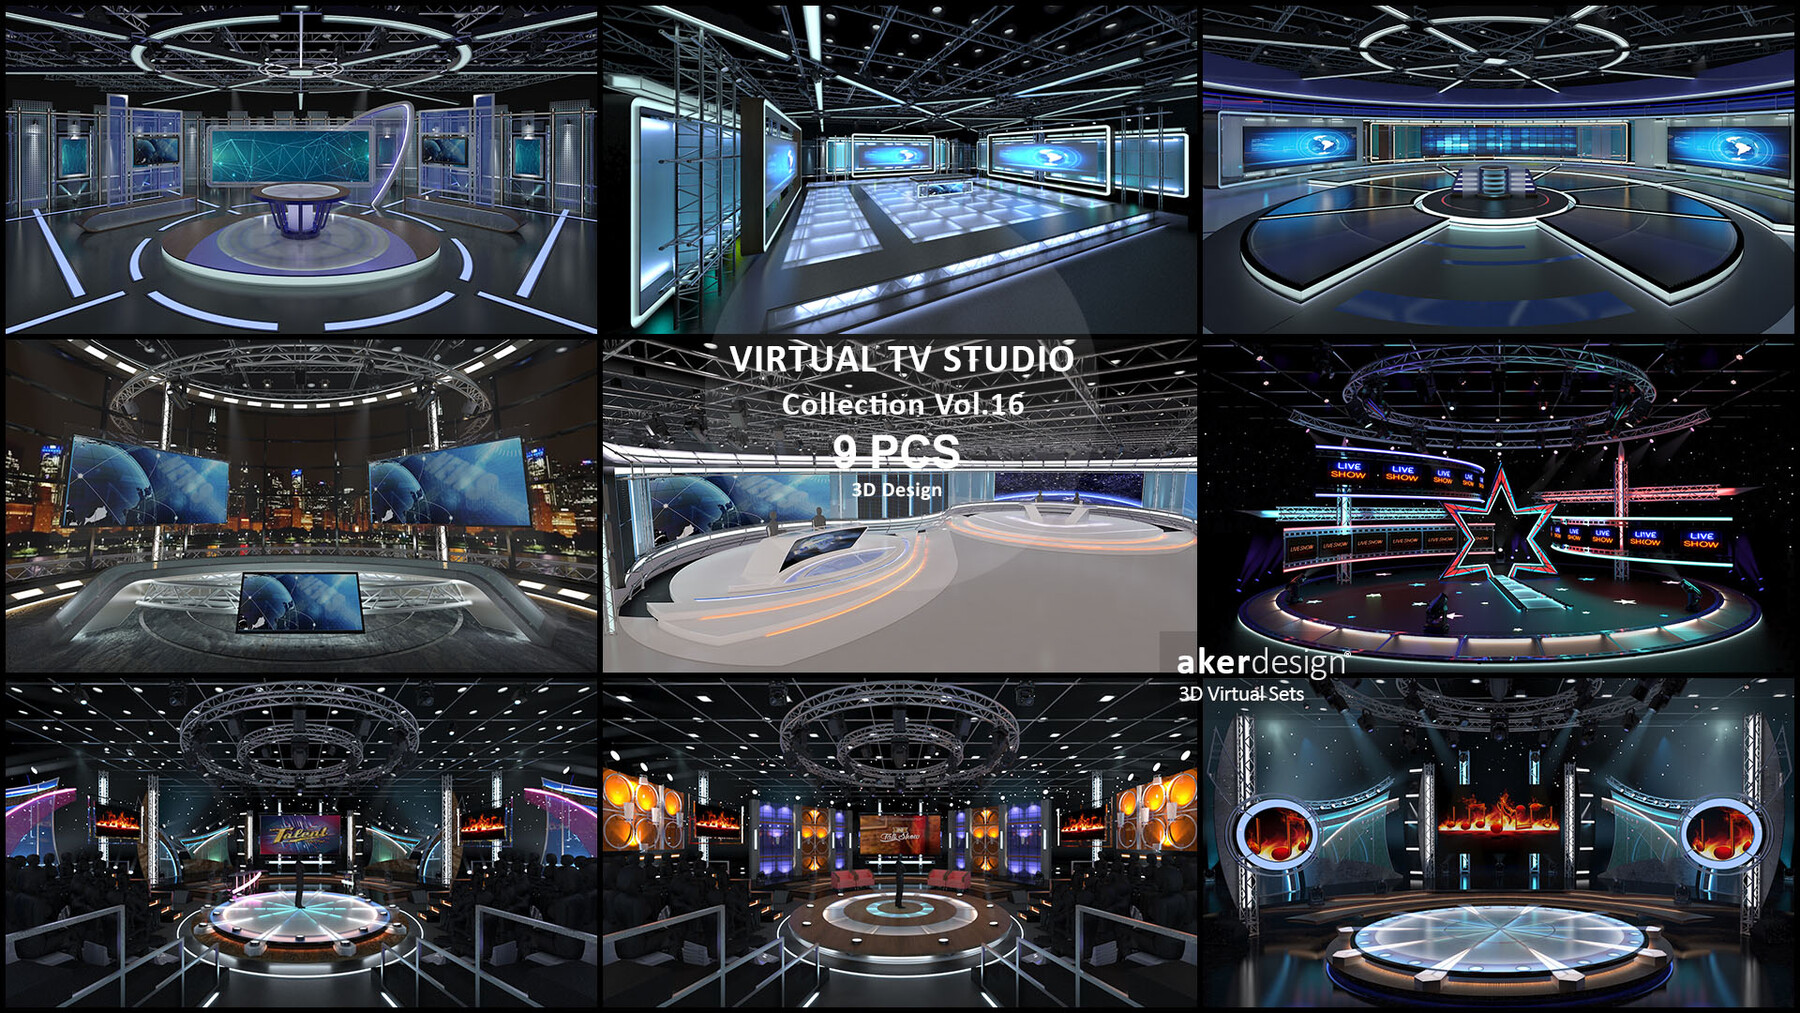 ArtStation - Virtual TV Studio Sets - Collection Vol 16 - 9 PCS DESIGN